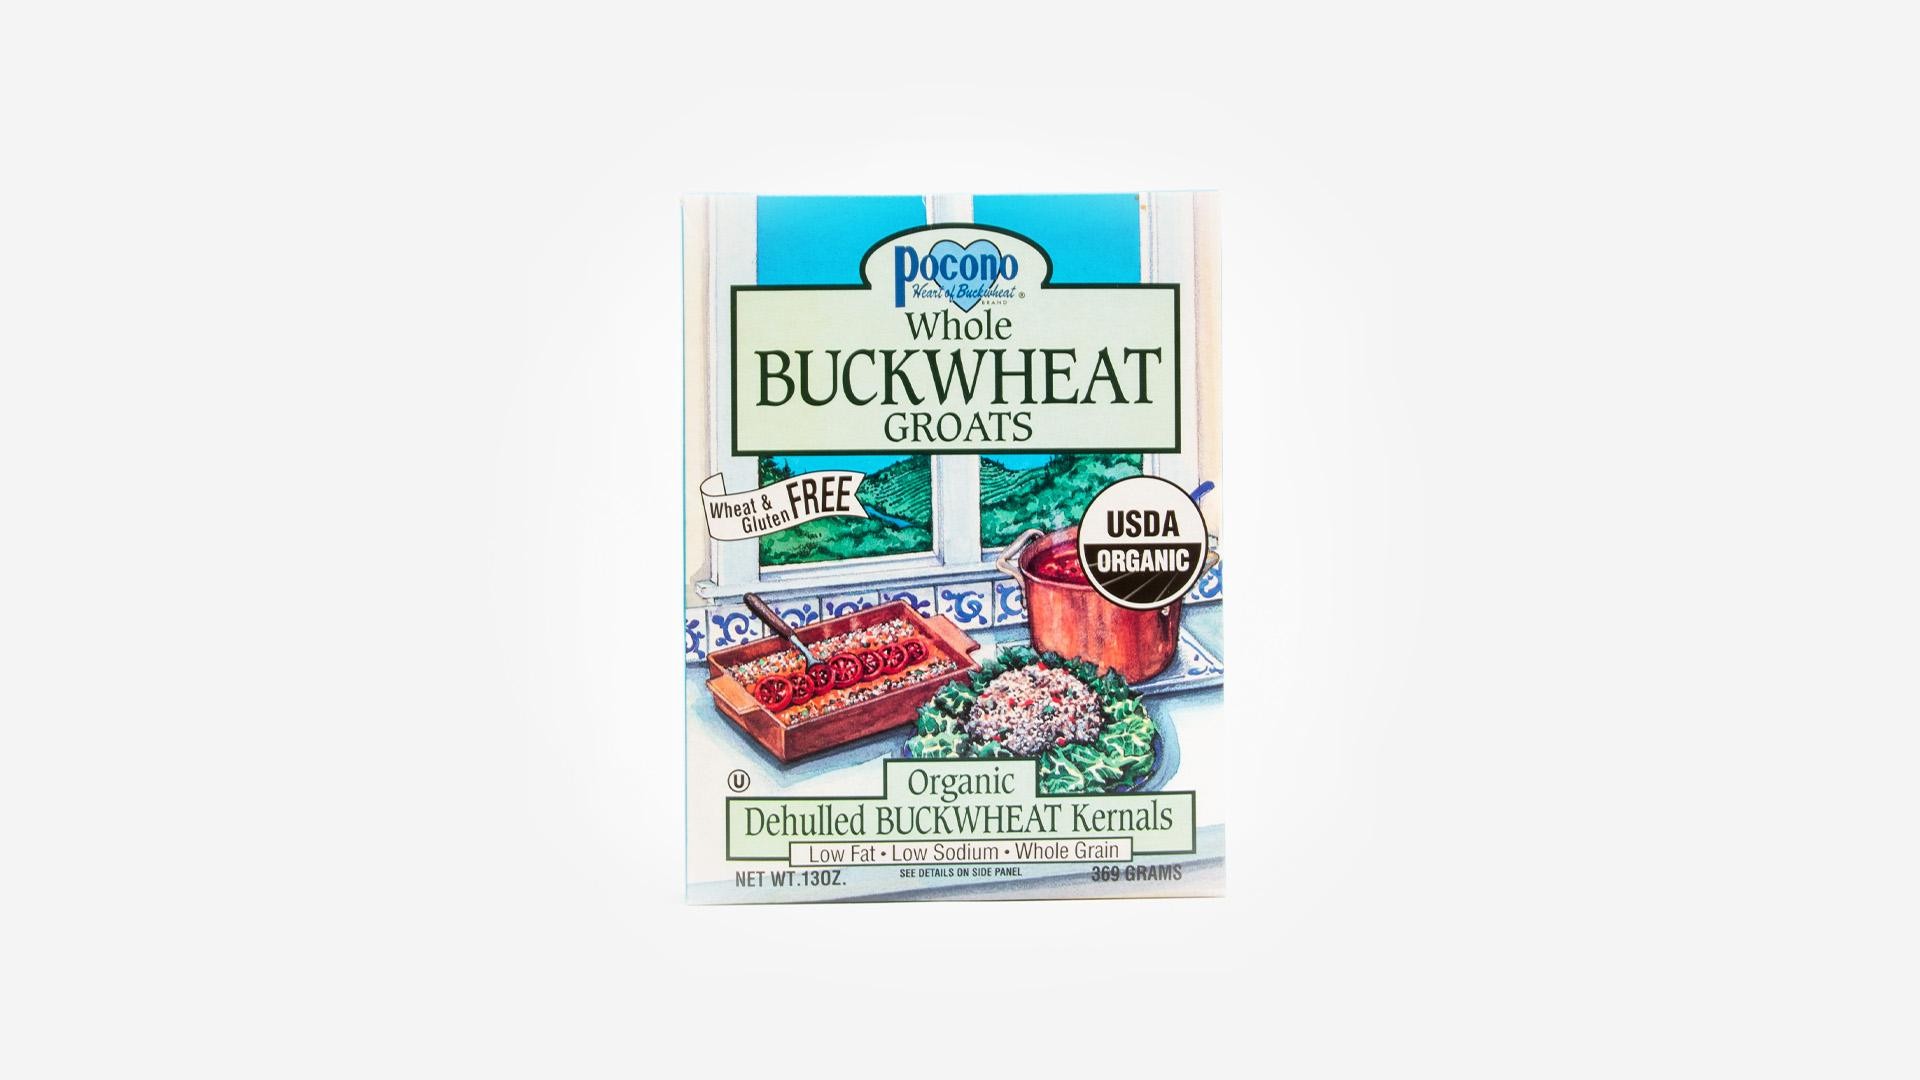 Pocono Whole Buckwheat Groats